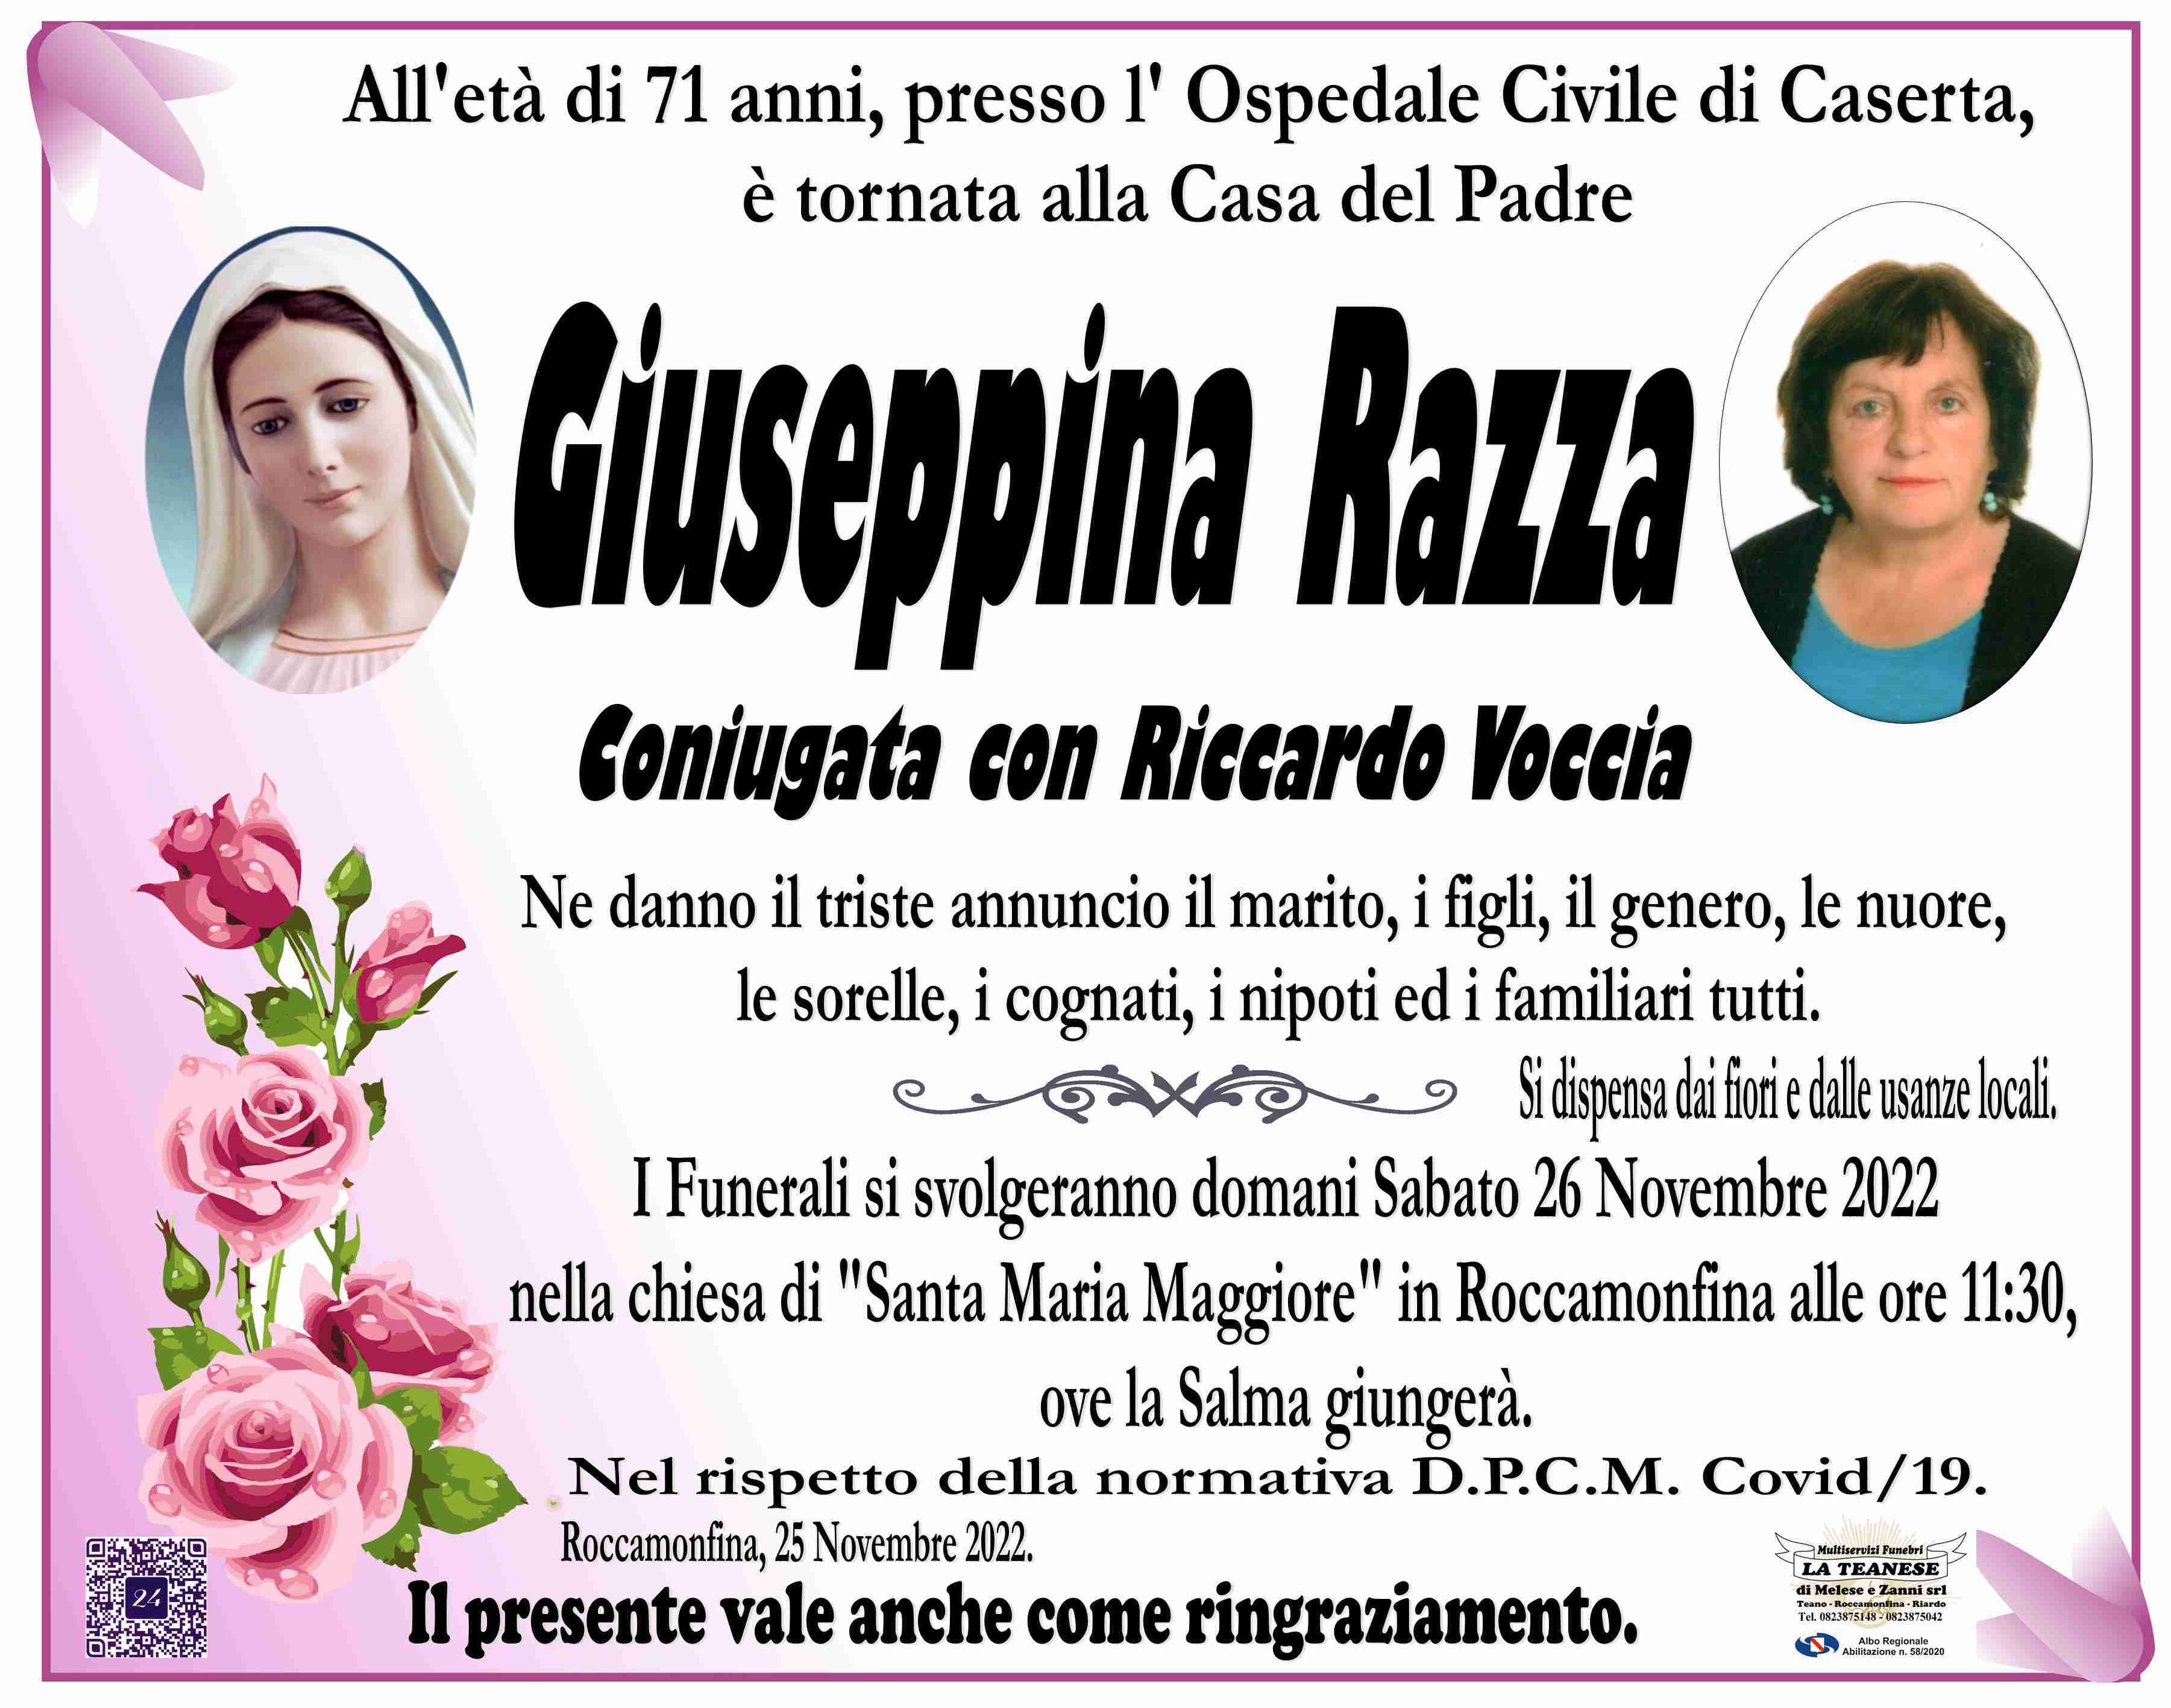 Giuseppina Razza